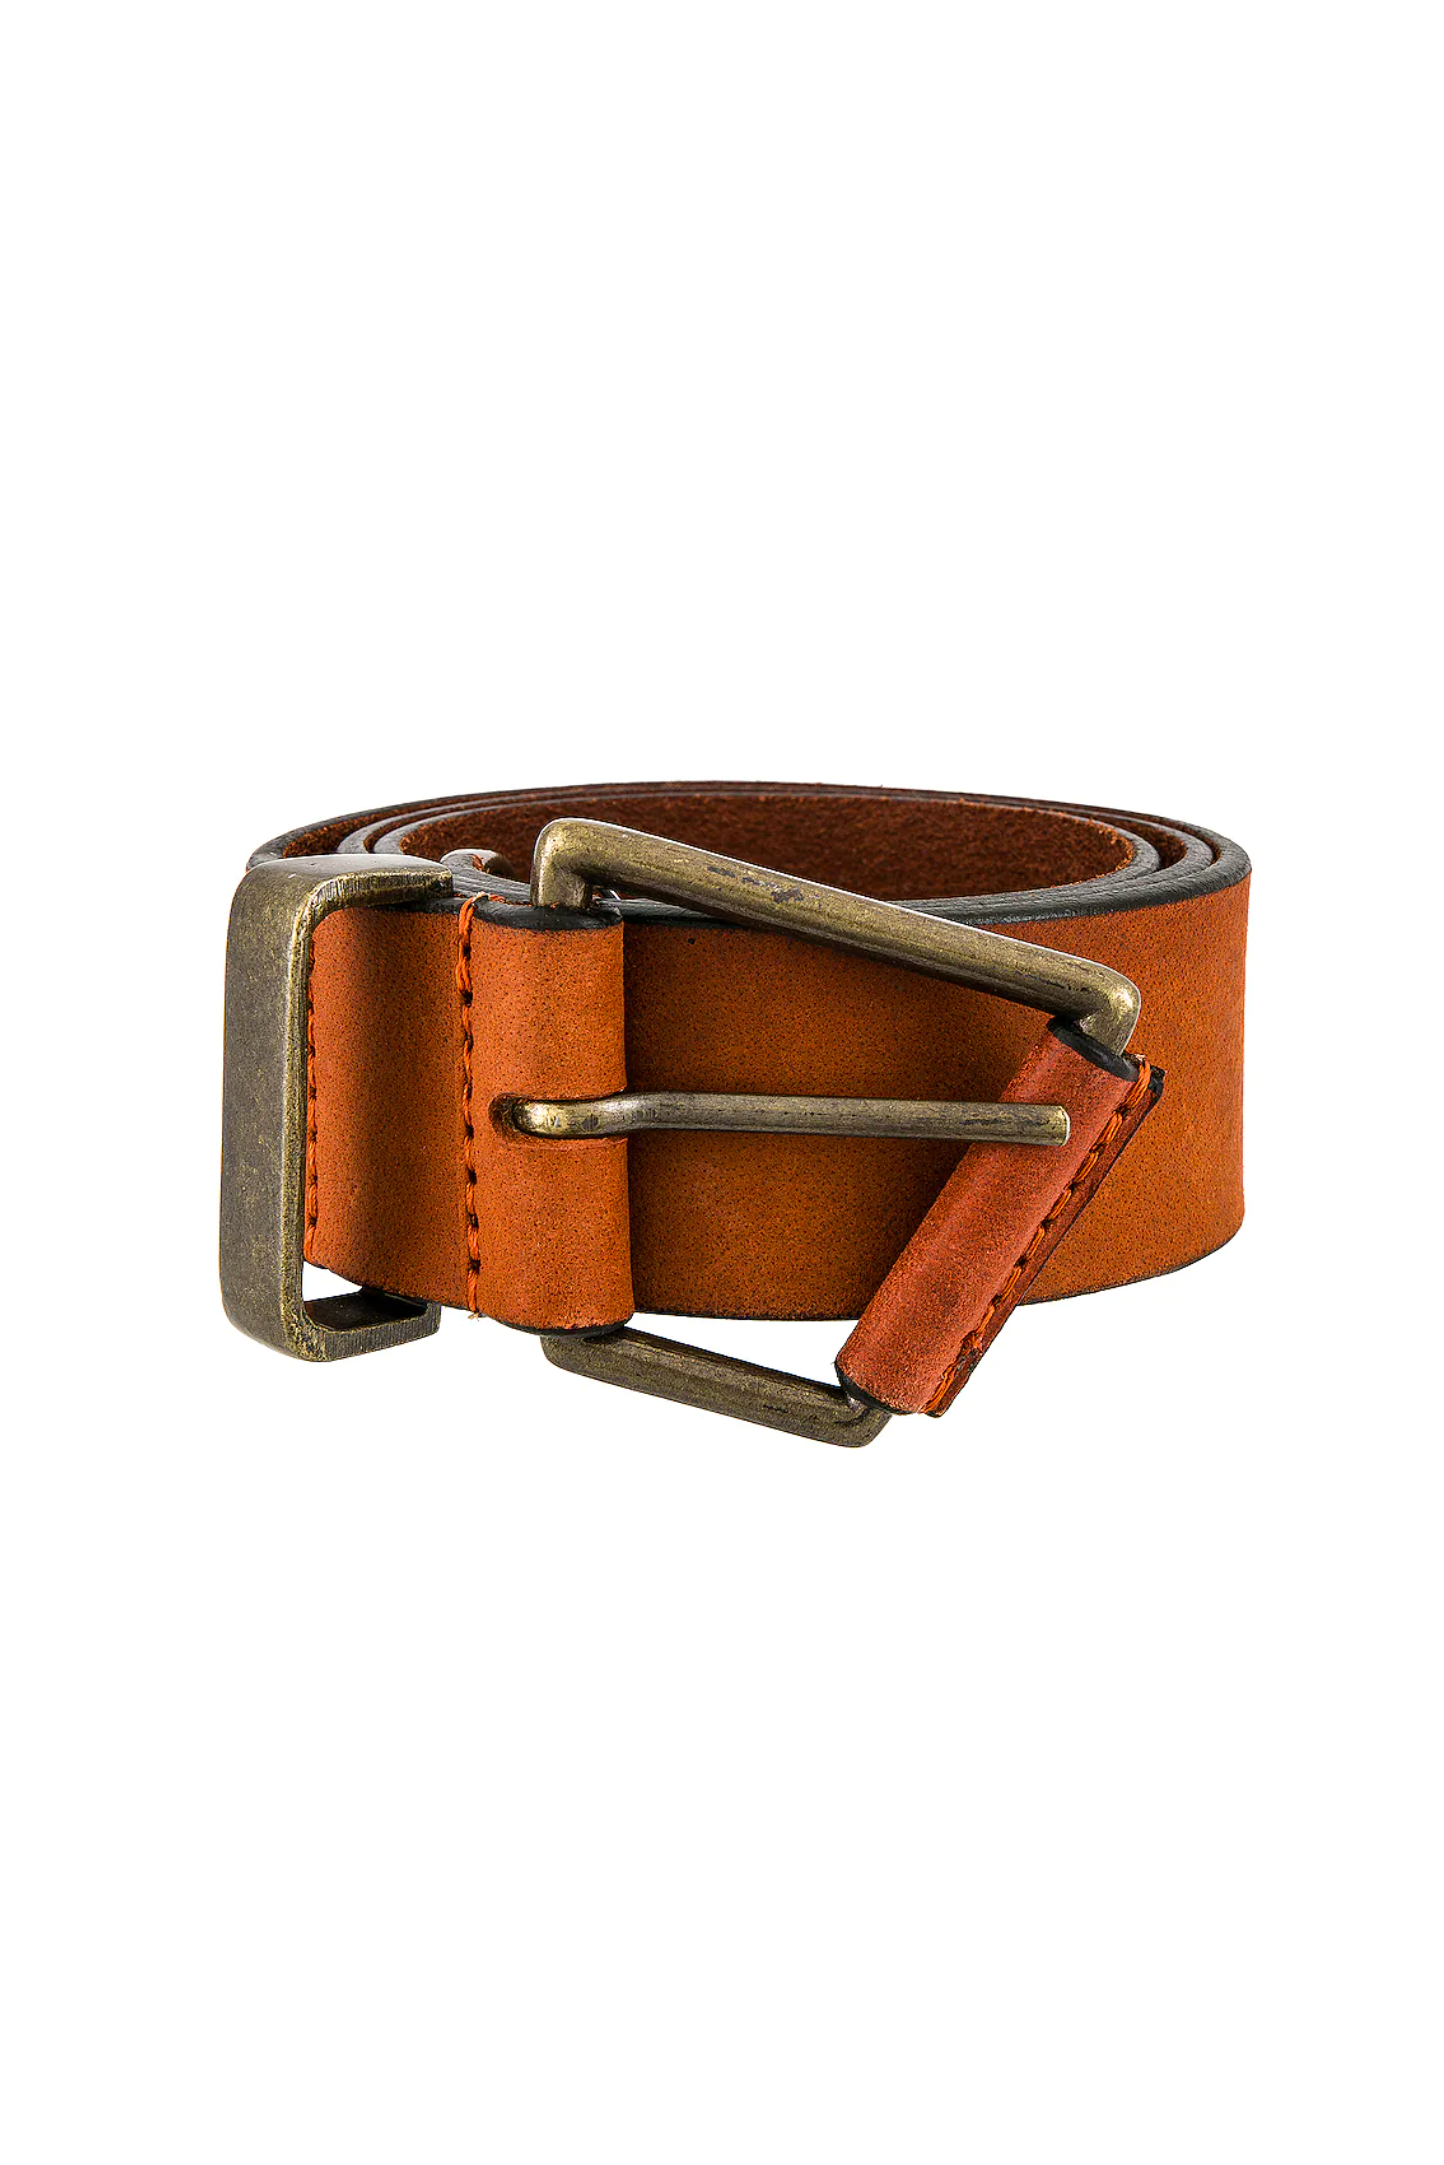 Getty Leather Belt - Sedona